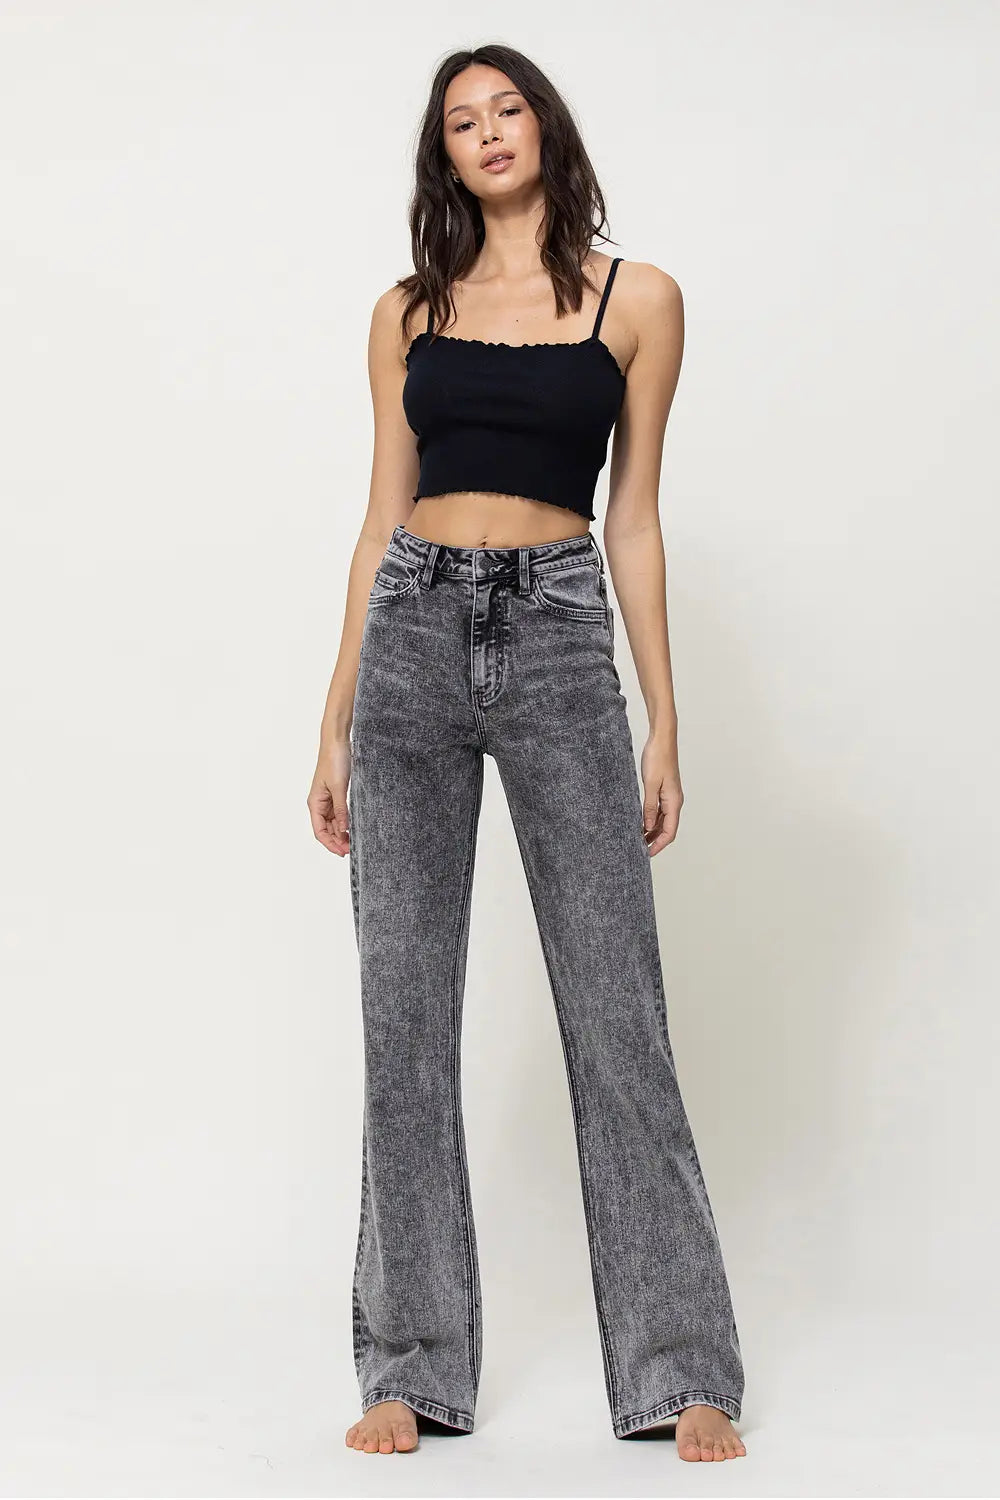 Leslie Gray 90’s Vintage Jeans